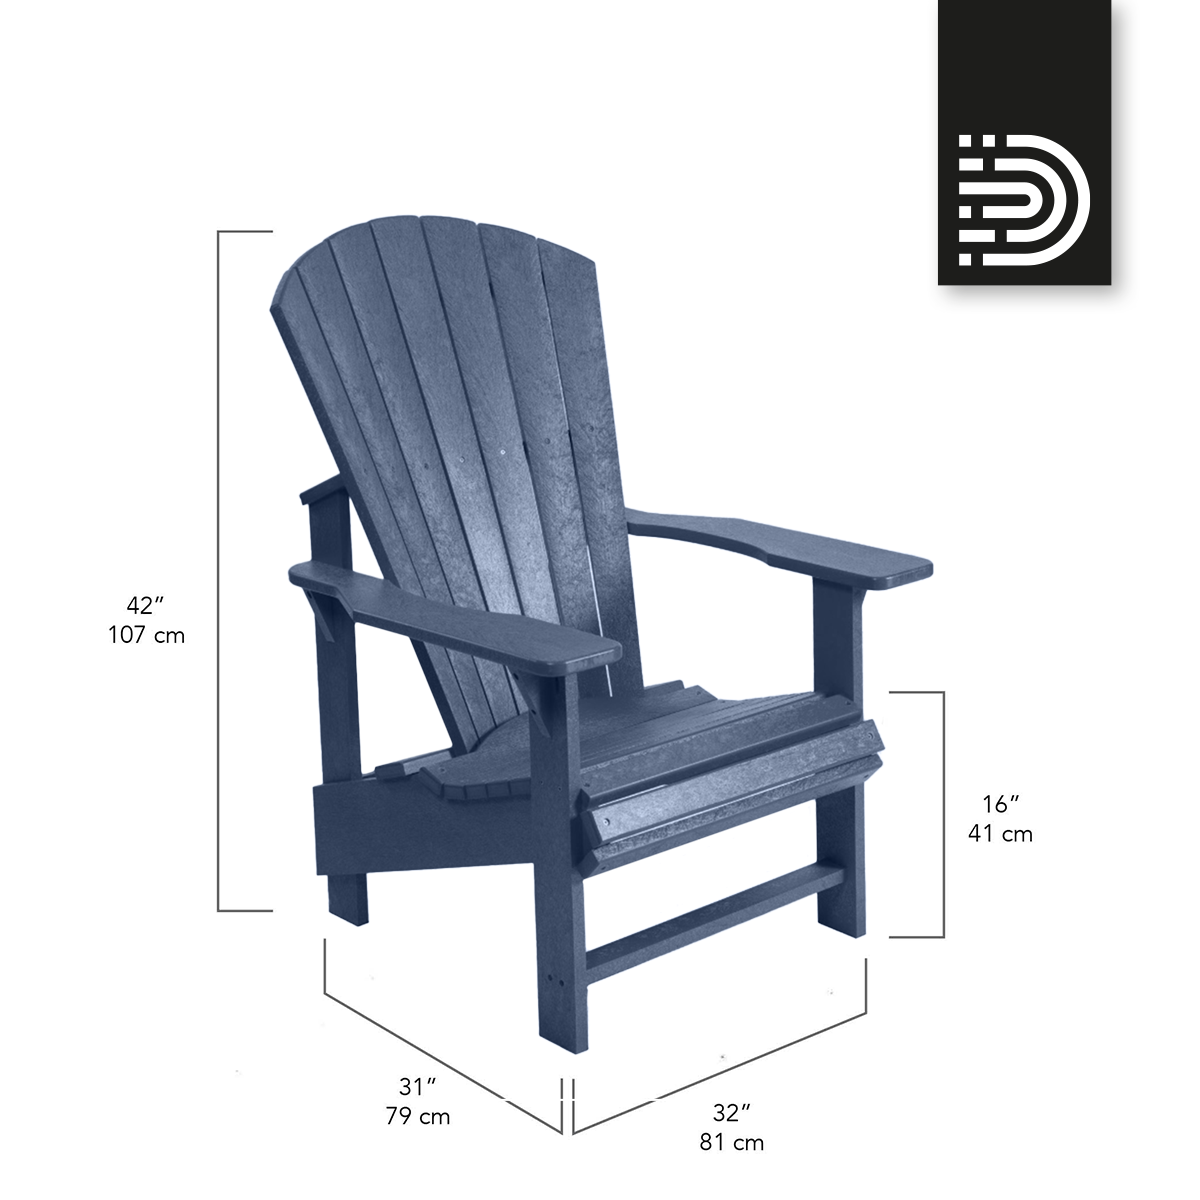 C03 Upright Adirondack Chair - navy 20